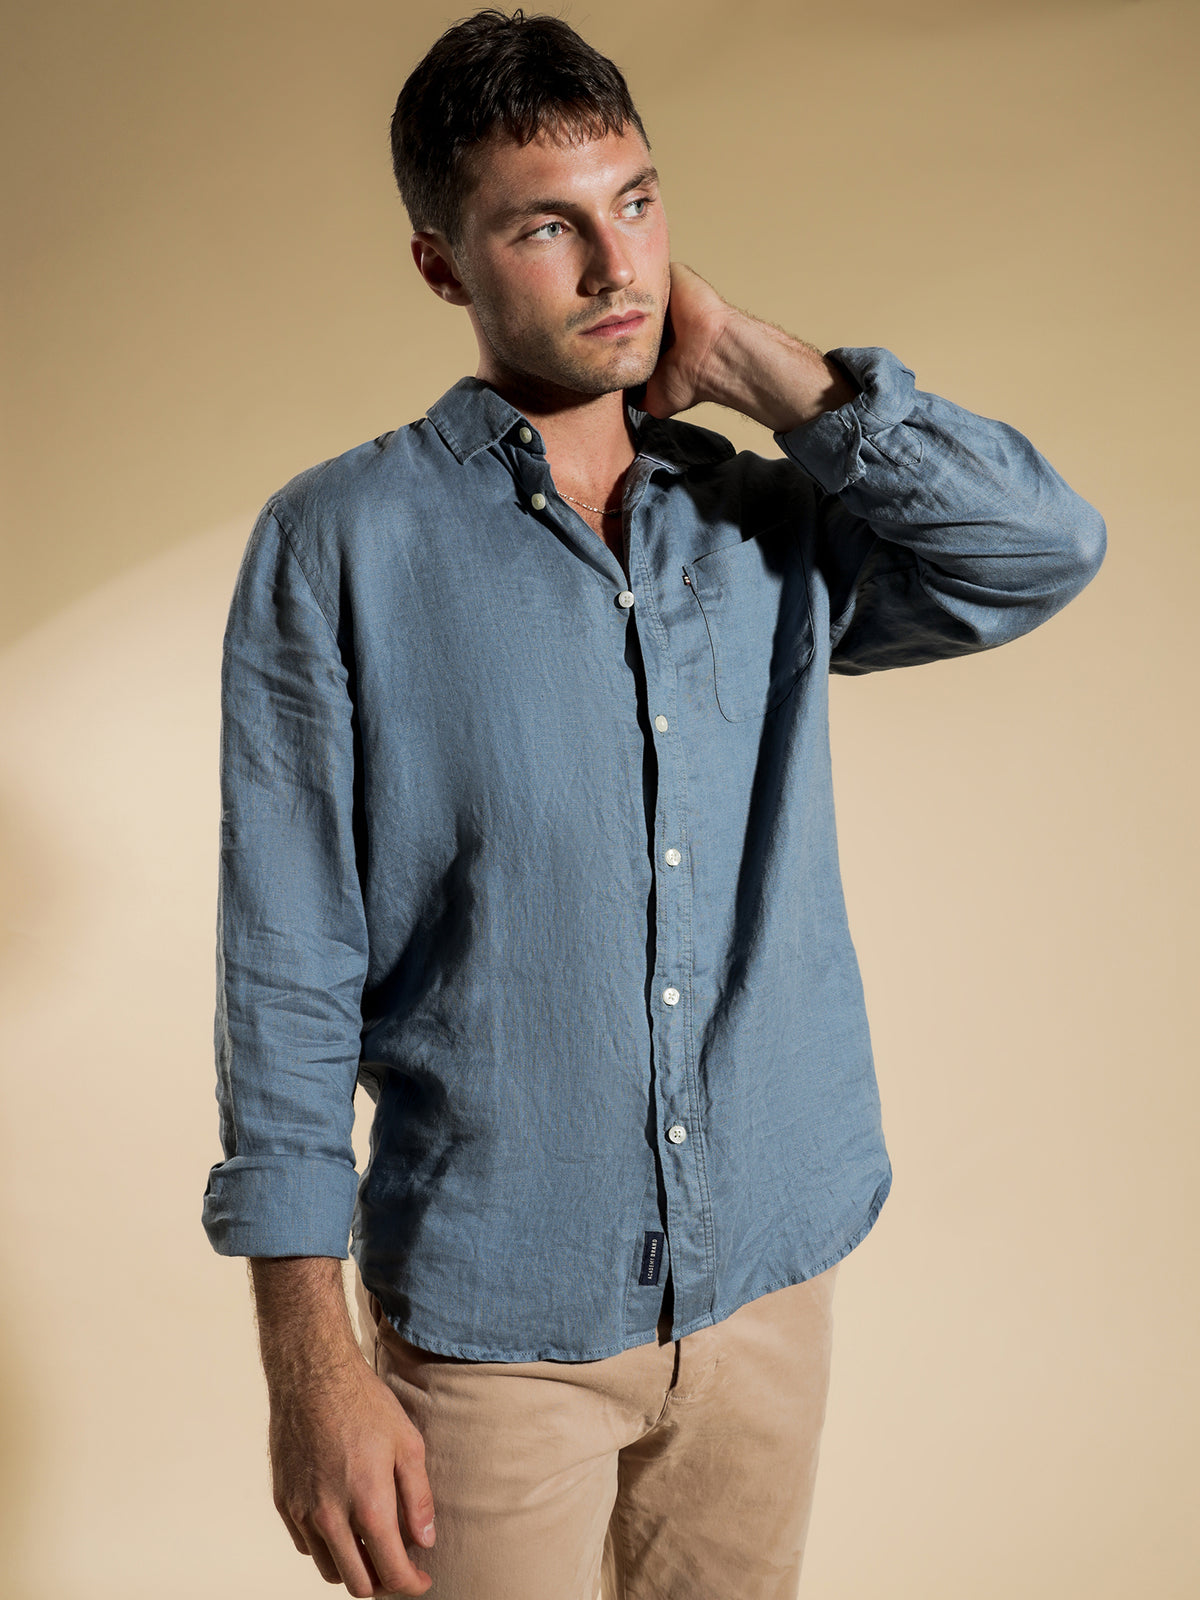 Hampton Linen Long Sleeve T-Shirt in Pewter Blue